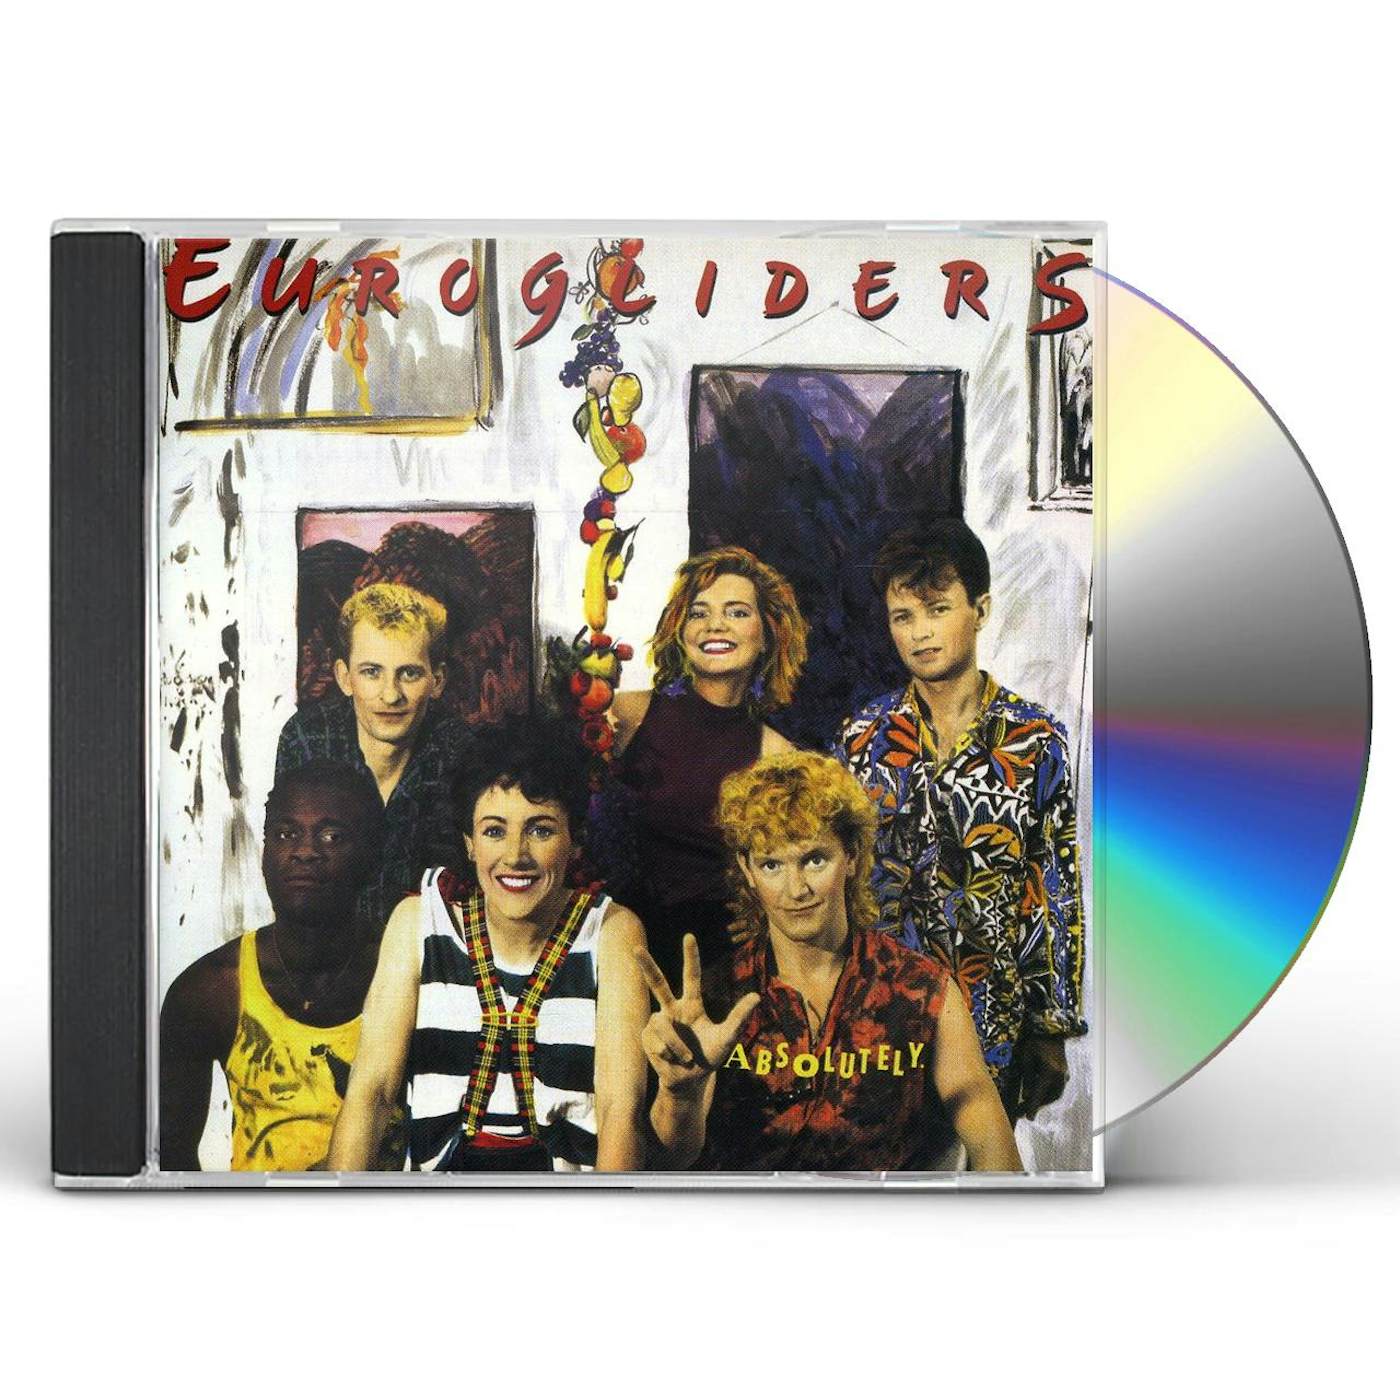 Eurogliders ABSOLUTELY CD